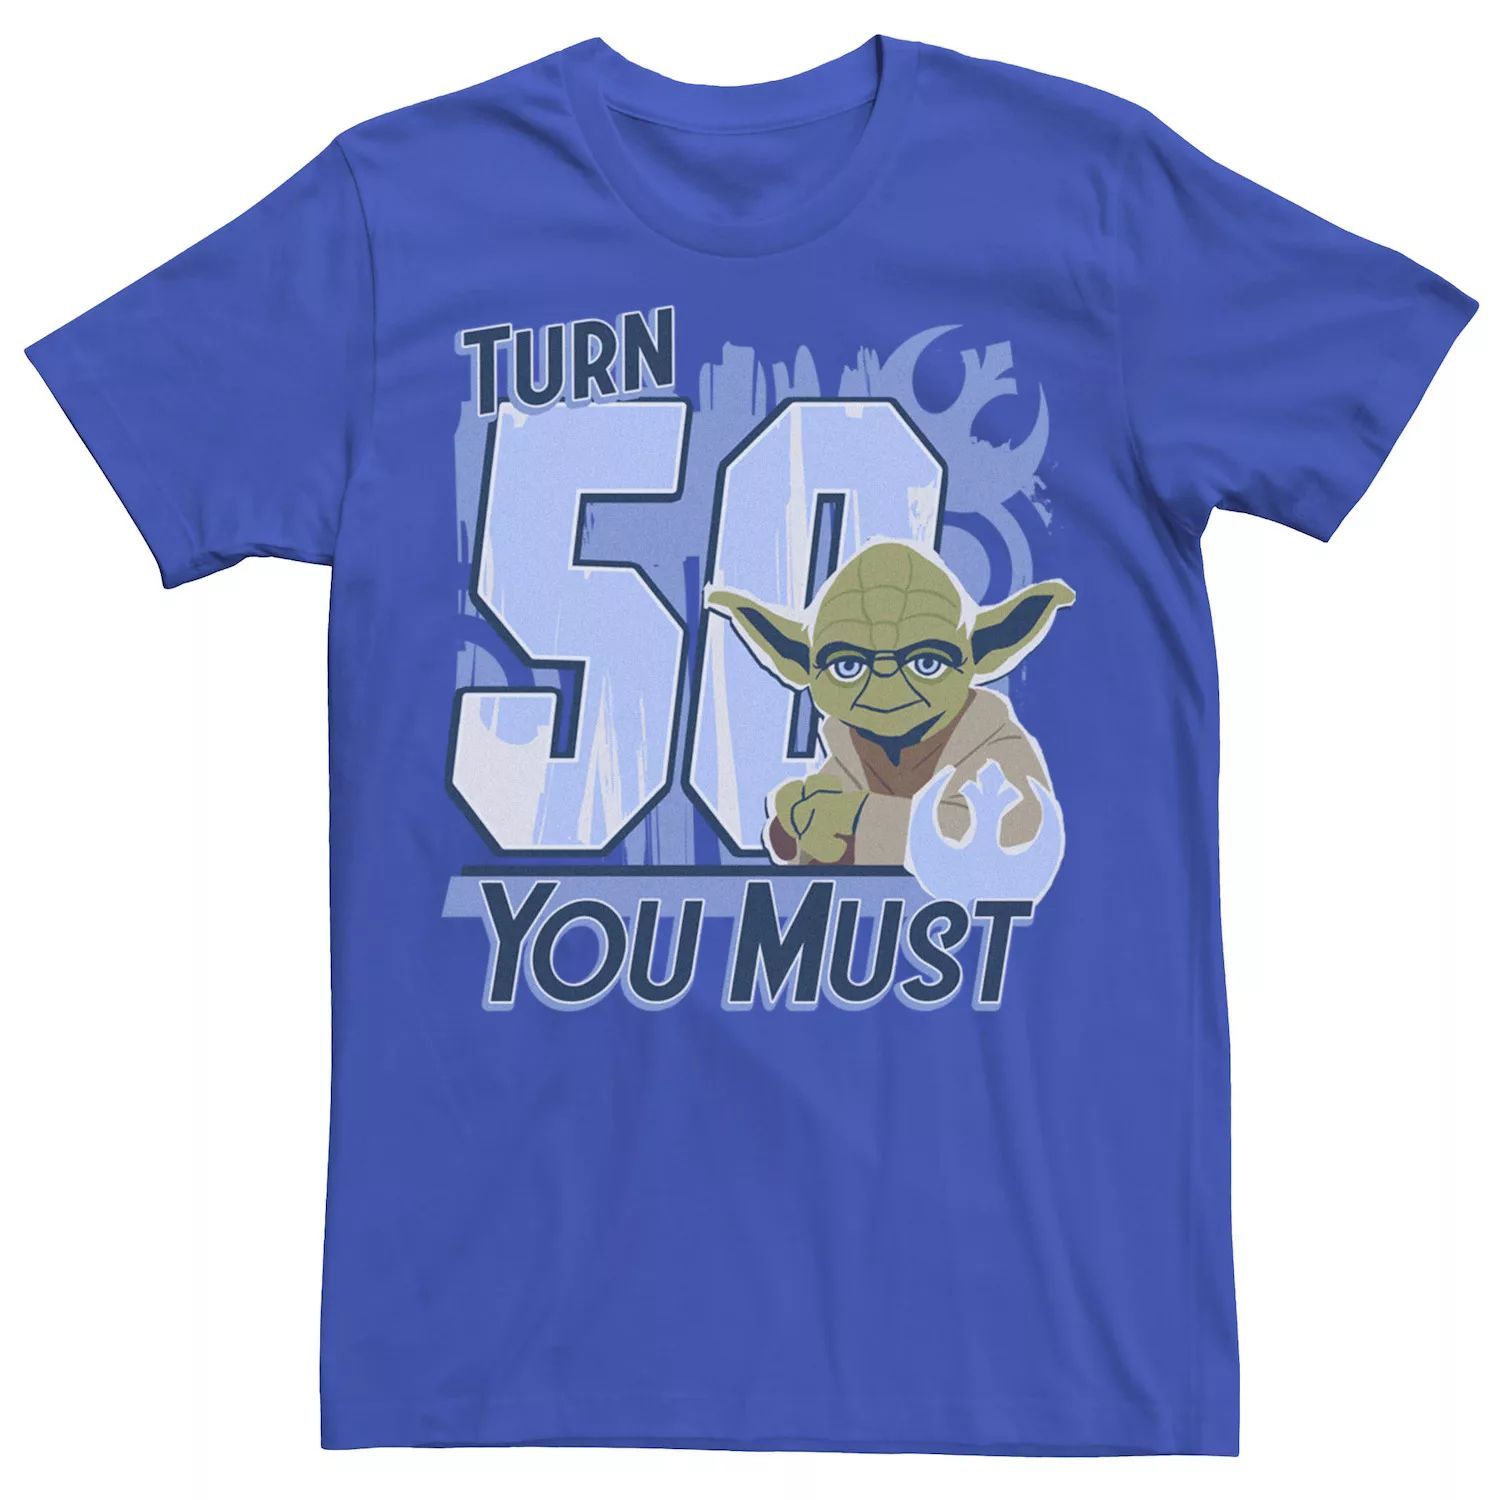 Мужская футболка с логотипом и портретом Star Wars Yoda Turn 50 You Must Rebel